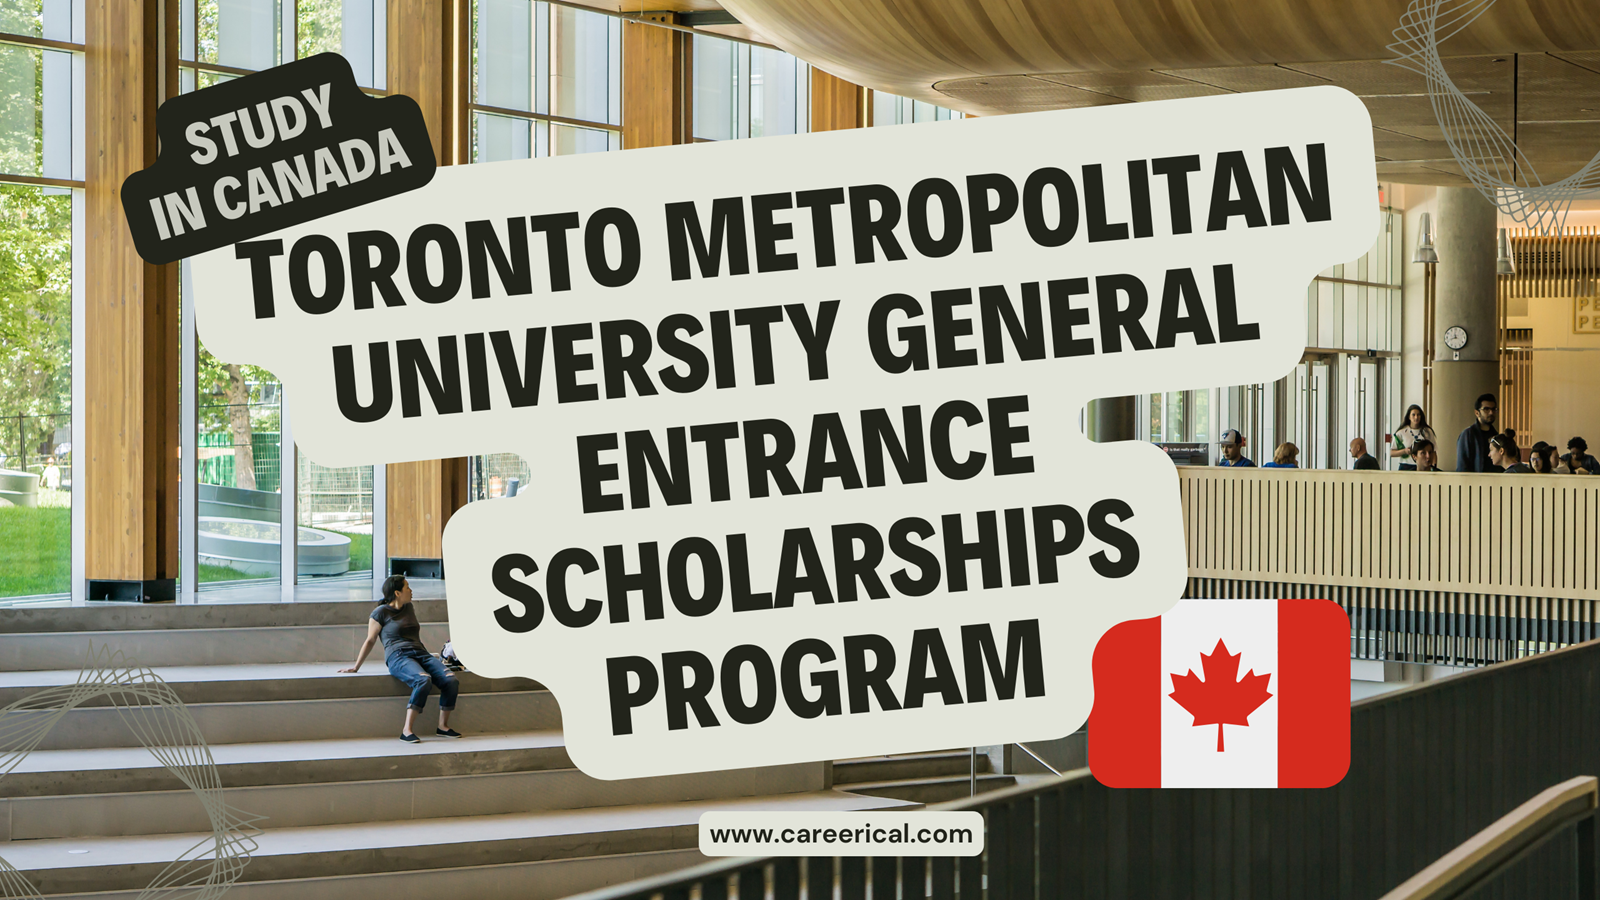 Toronto Metropolitan University General Entrance Scholarships Program